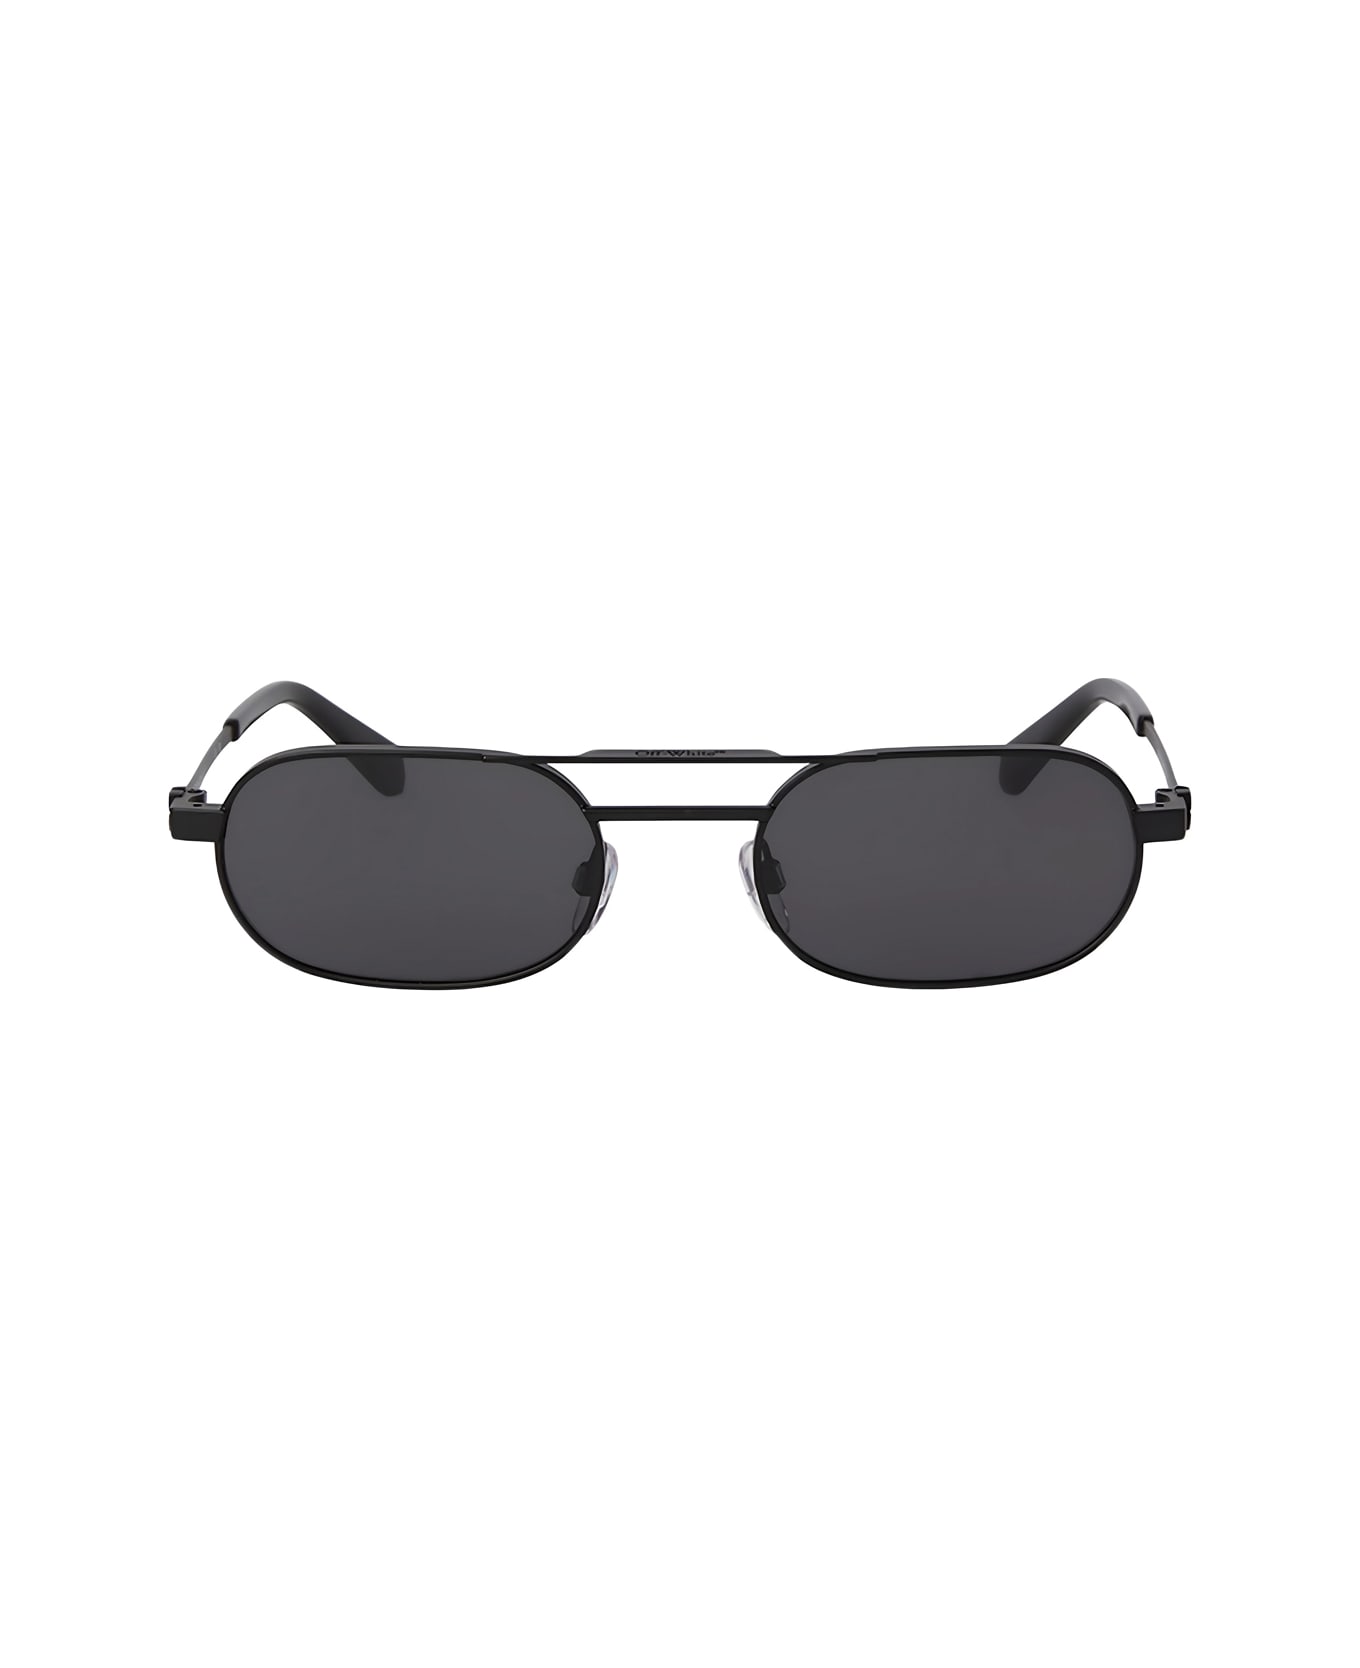 Off-White Oeri123 Vaiden 1007 Black Dark Grey Sunglasses - Nero サングラス